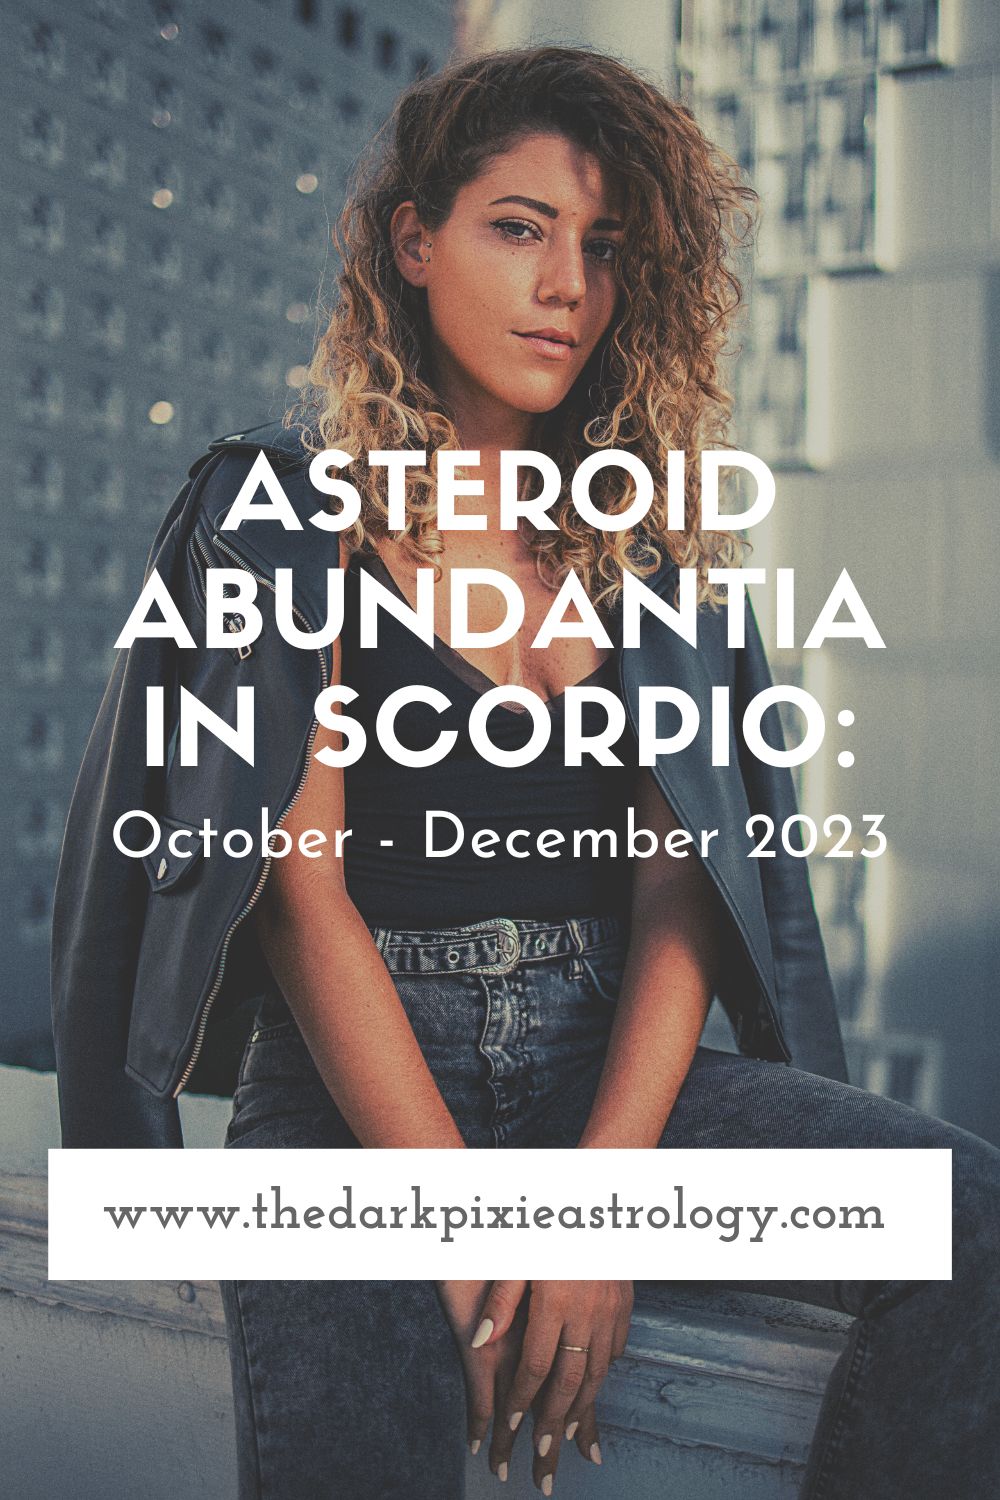 Asteroid Abundantia in Scorpio: October - December 2023 - The Dark Pixie Astrology